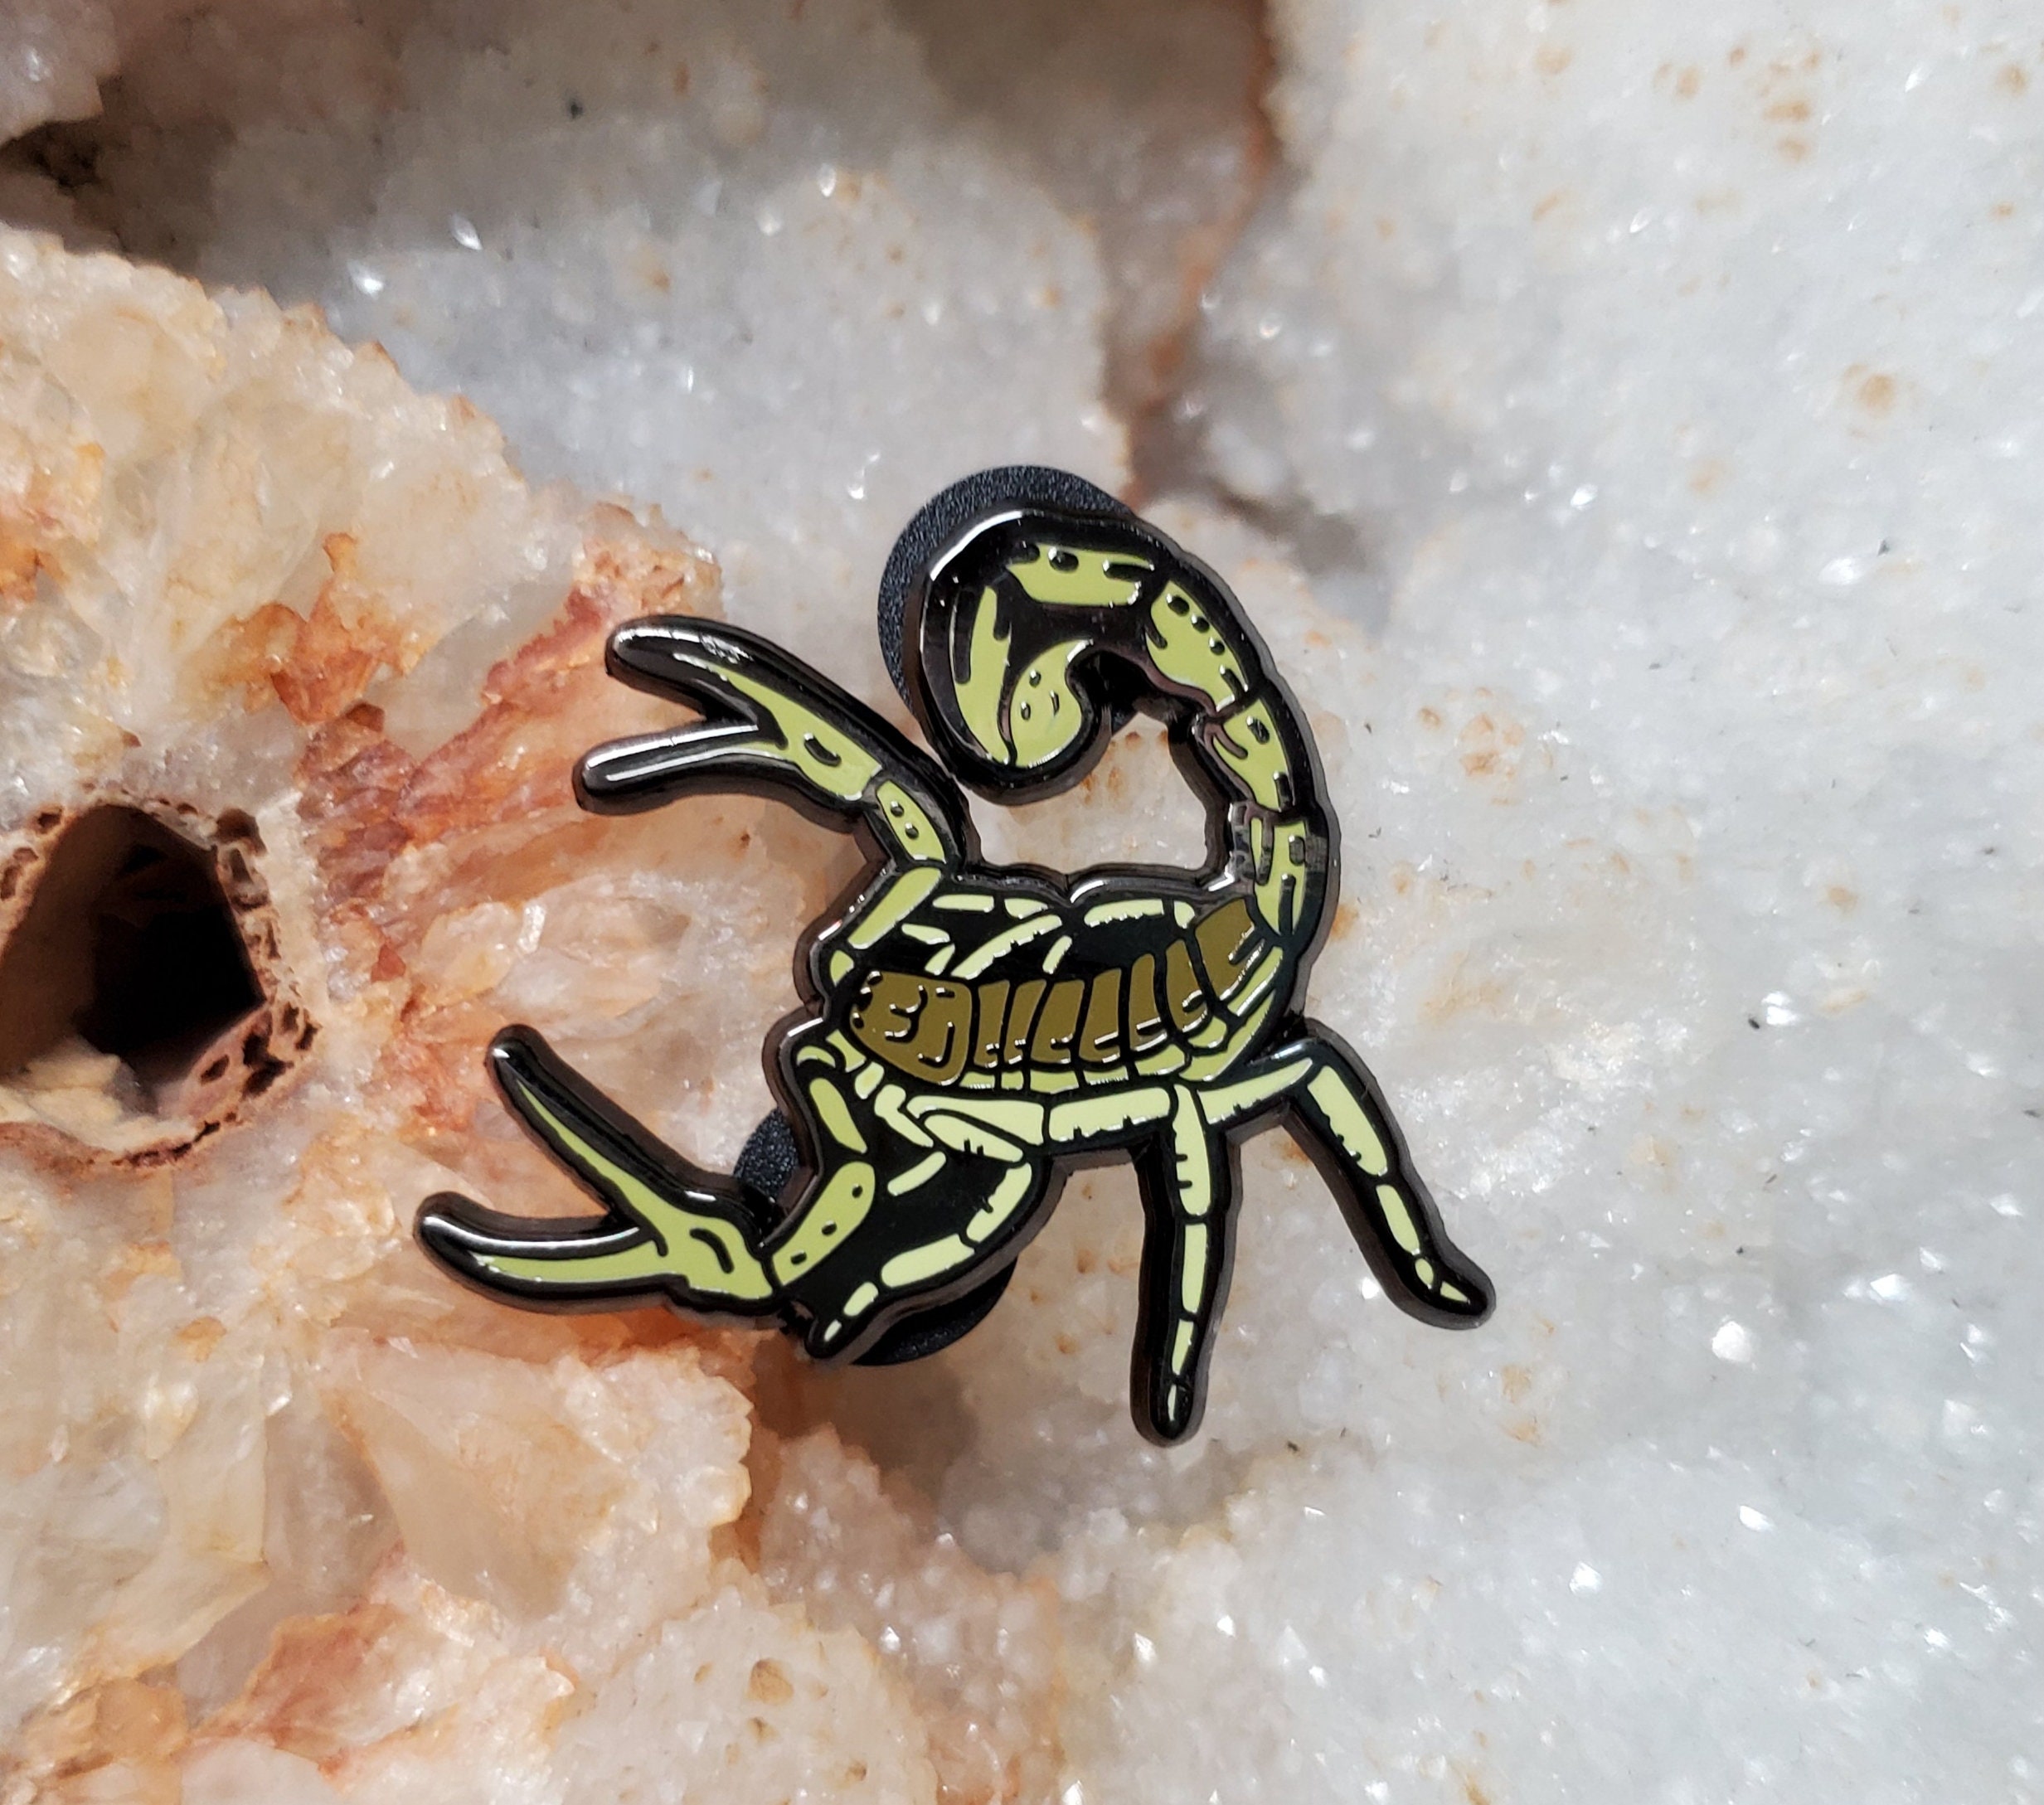 Scorpion Fatality Sliding Mortal Kombat Pin Glow in the Dark 